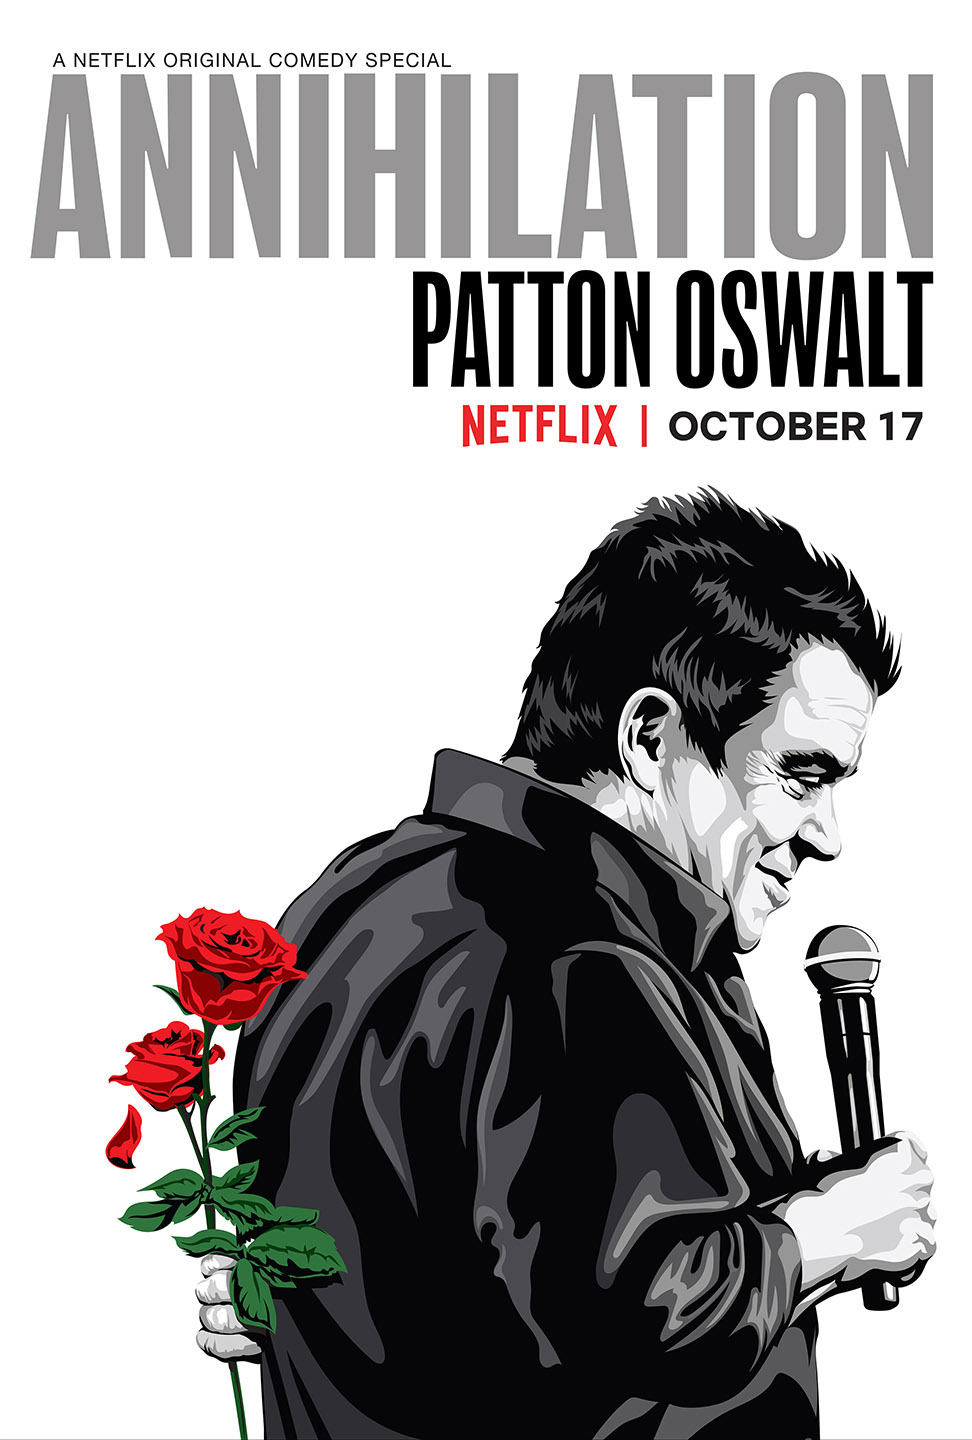 Extra Large TV Poster Image for Patton Oswalt: Annihilation 